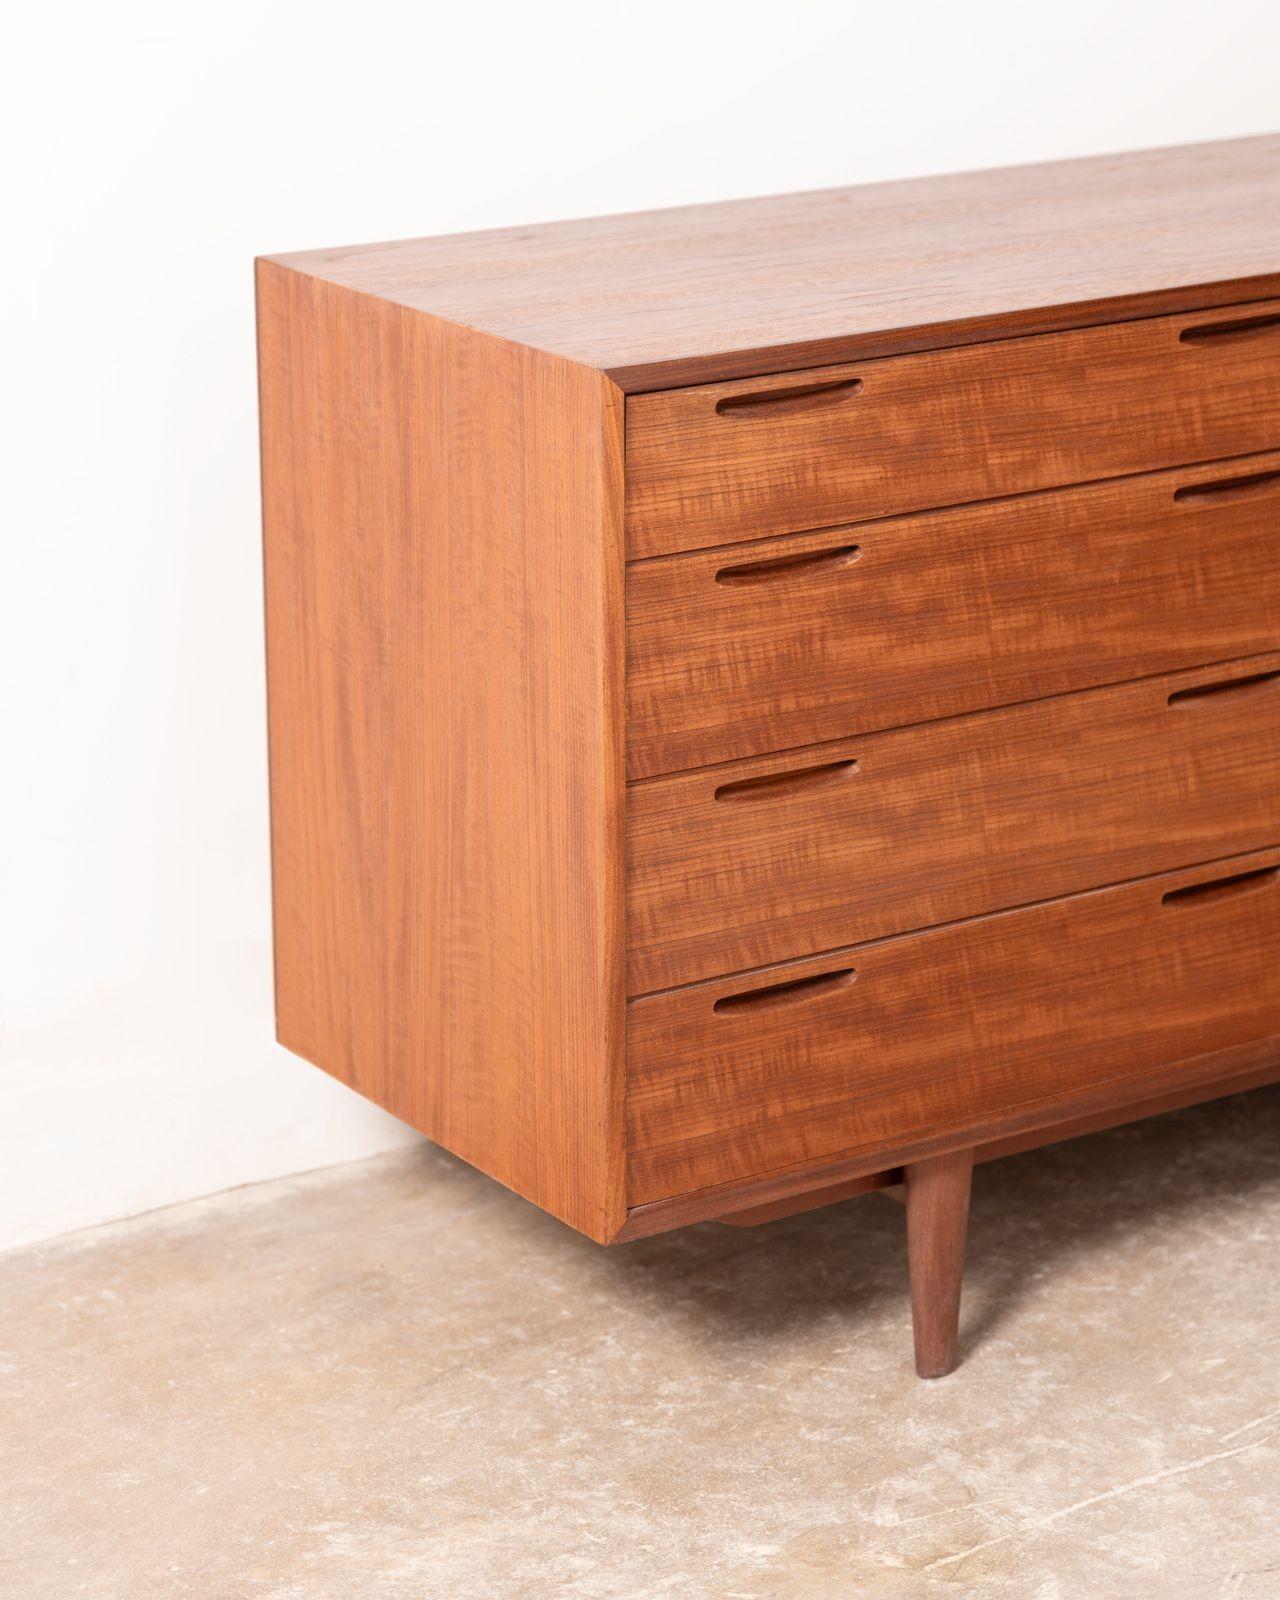 Ib Kofod Larsen Danish Modern Twelve Drawer Dresser in Teak 1960s For Sale 1